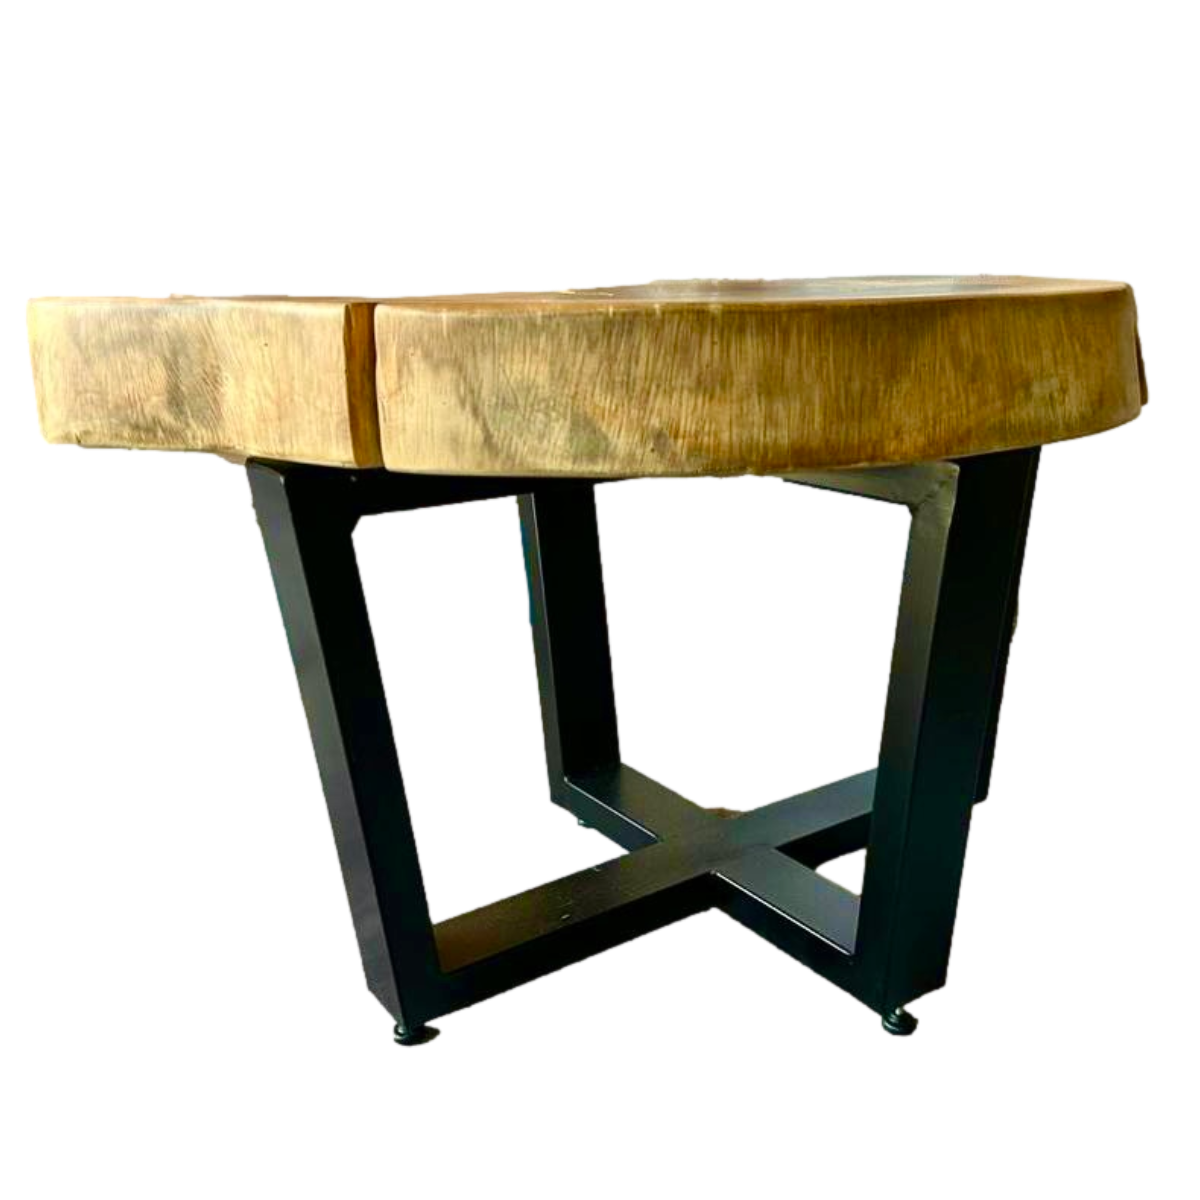 Mexican Parota Wood Wrought Iron Base Table 35.8" L x 29" W - Romina Coffee Table MeXican Artisan Fashion & Design